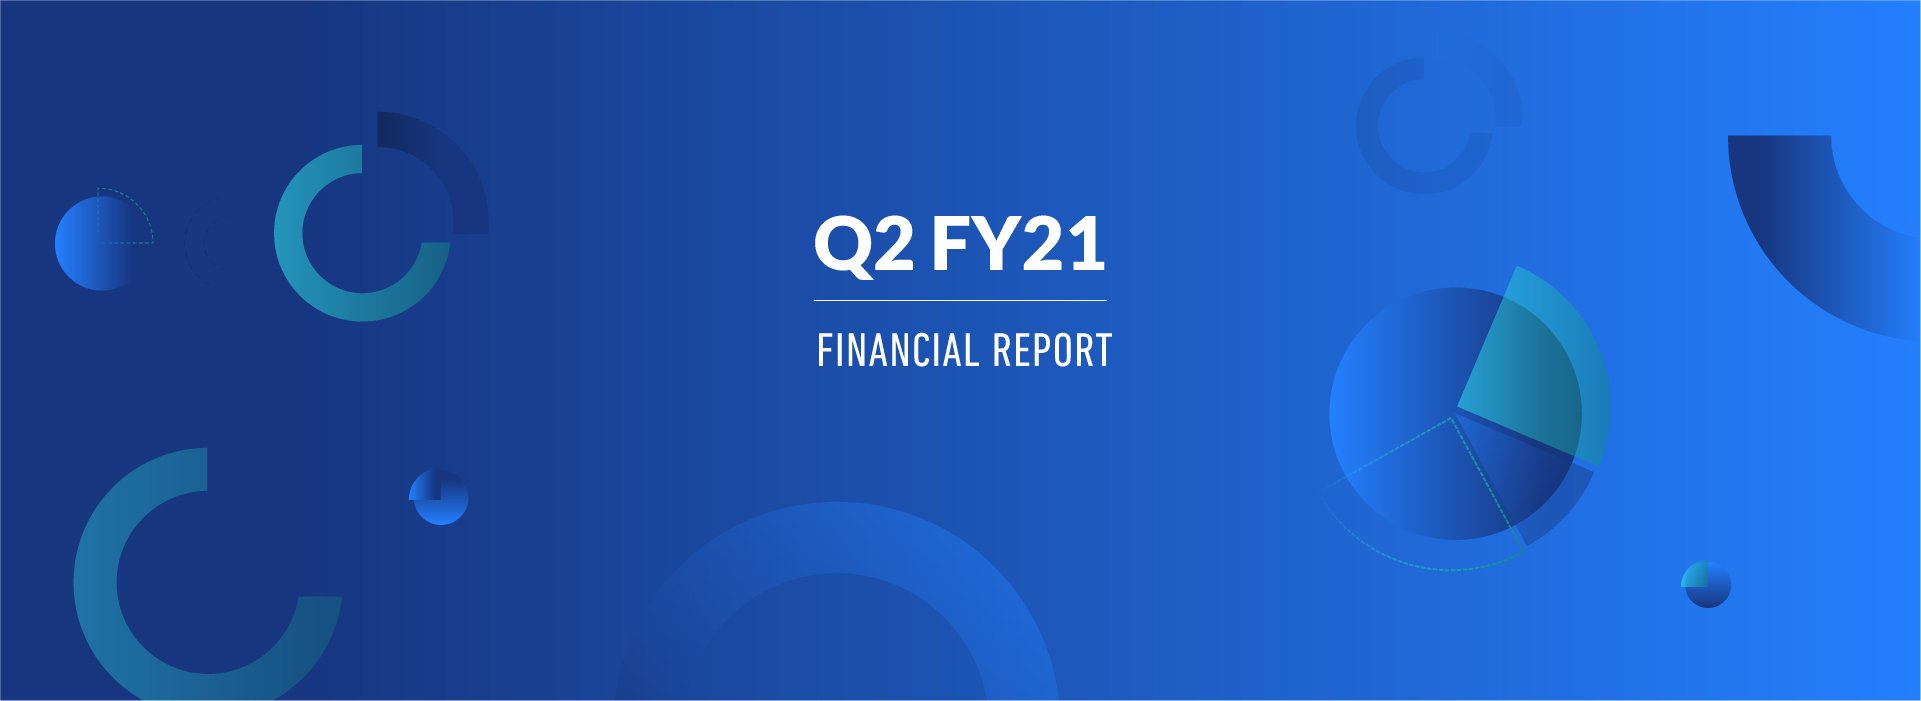 PR_FY21-Q2-Financial-Report_banner